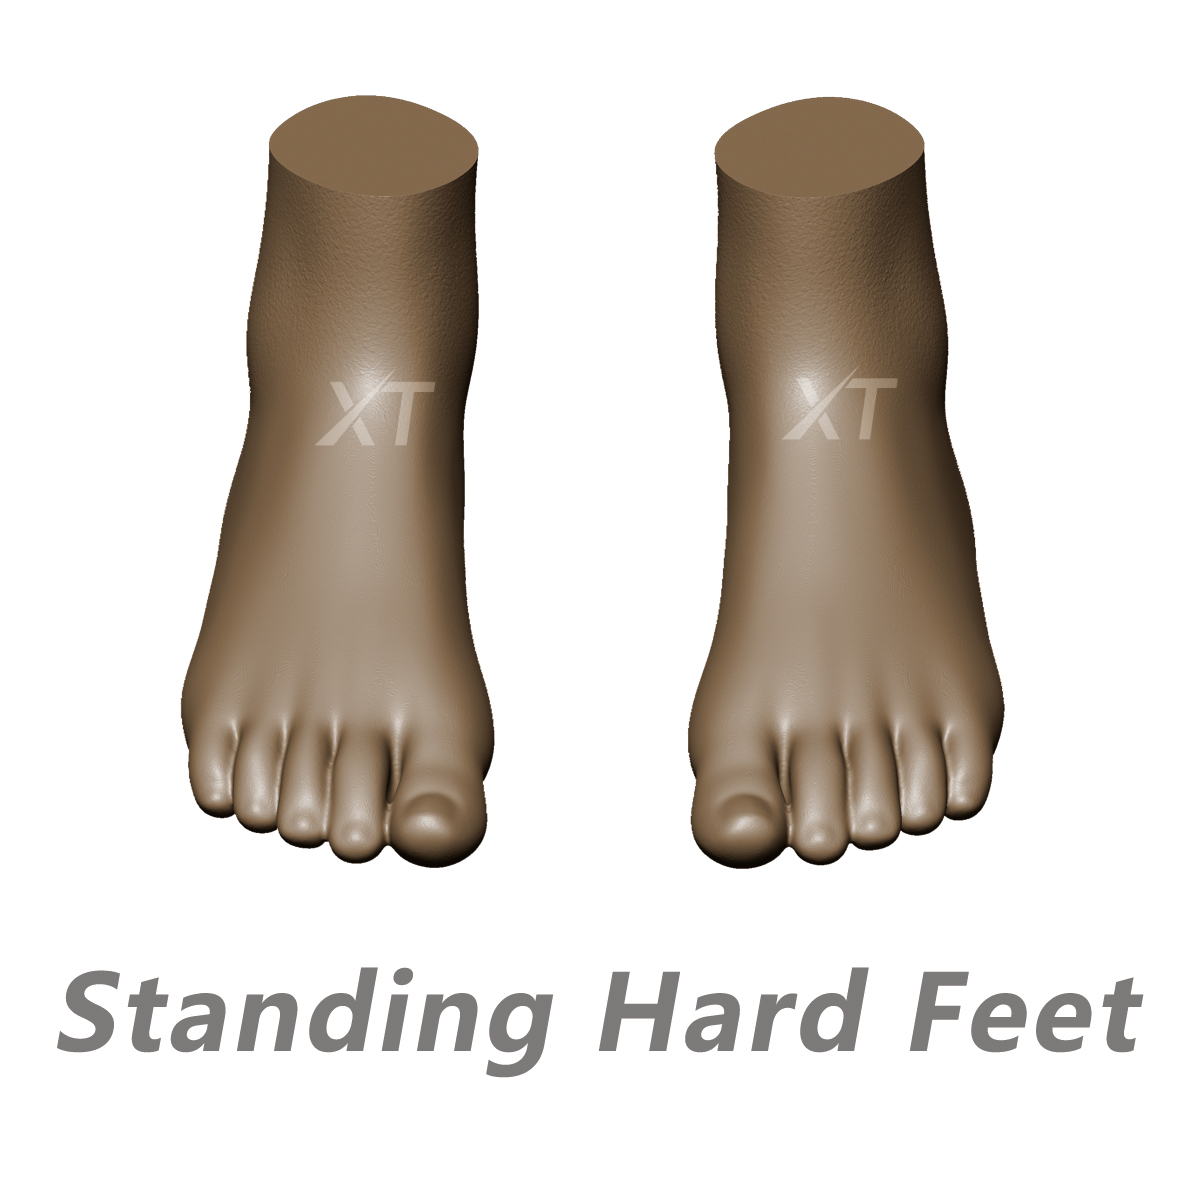 Hard standing